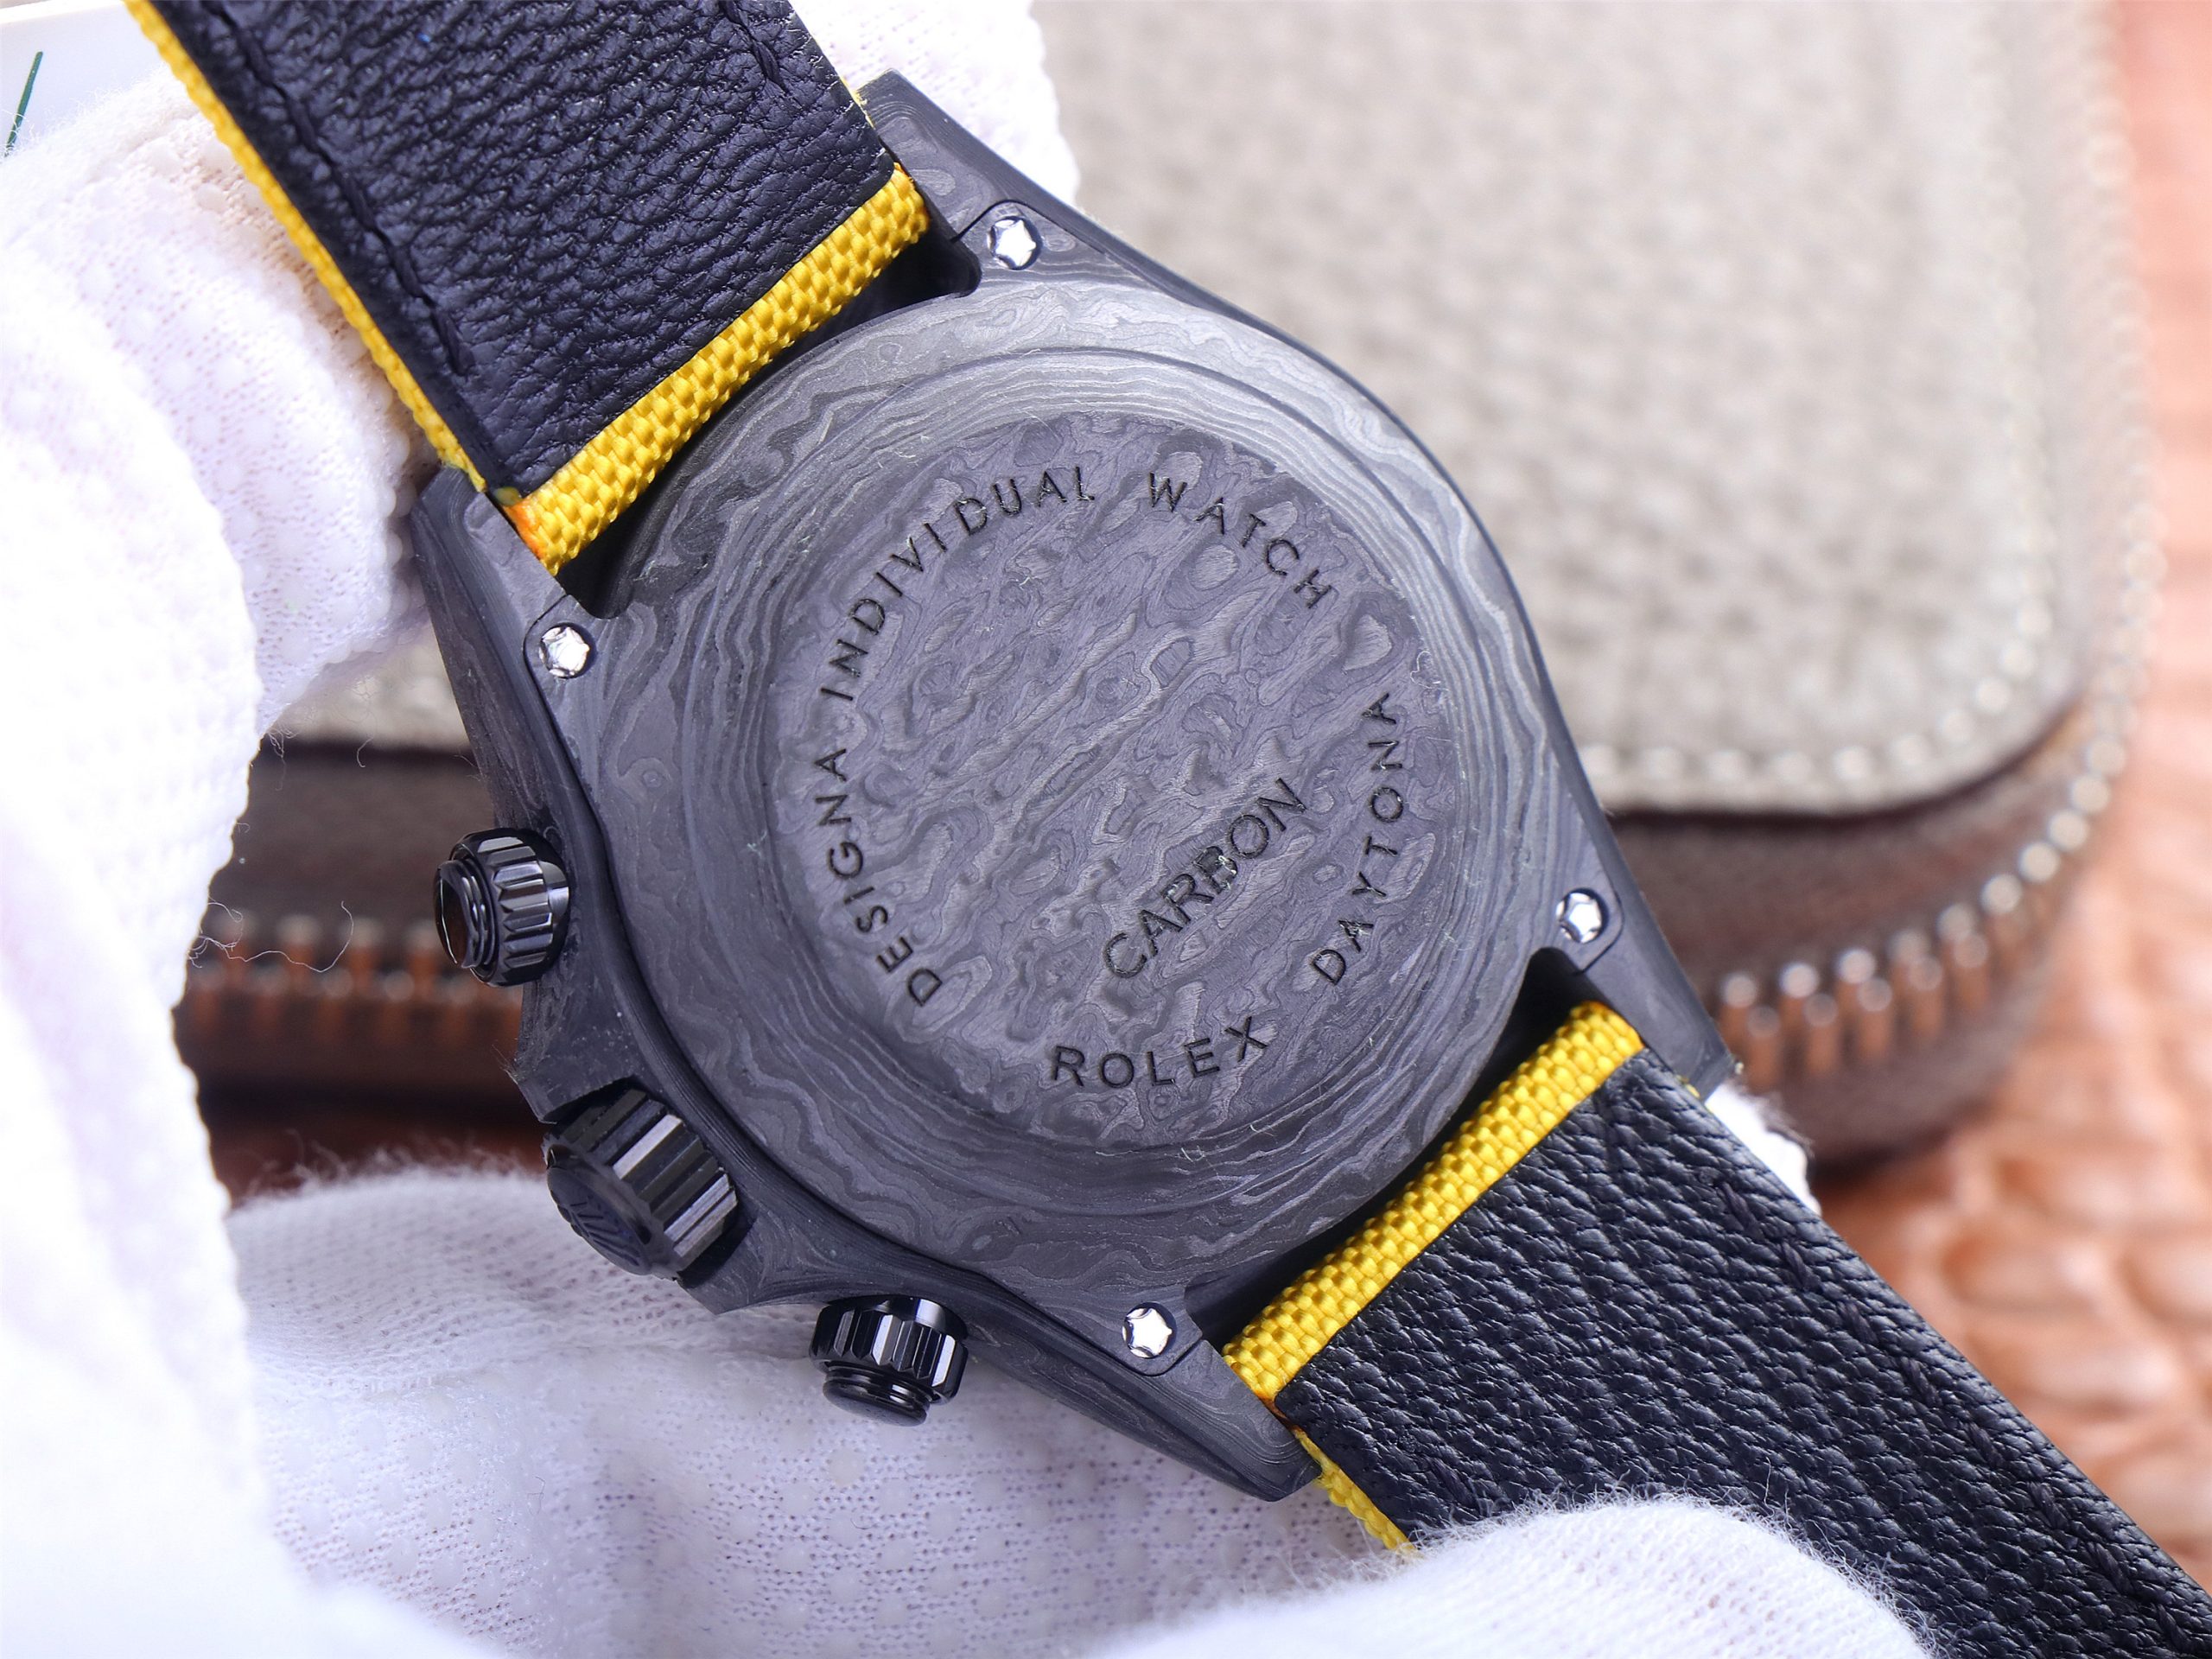 2023021204524840 scaled - 高仿彩色迪通拿手錶價格 JH廠手錶勞力士迪通拿碳纖維定制版 復刻錶￥4580